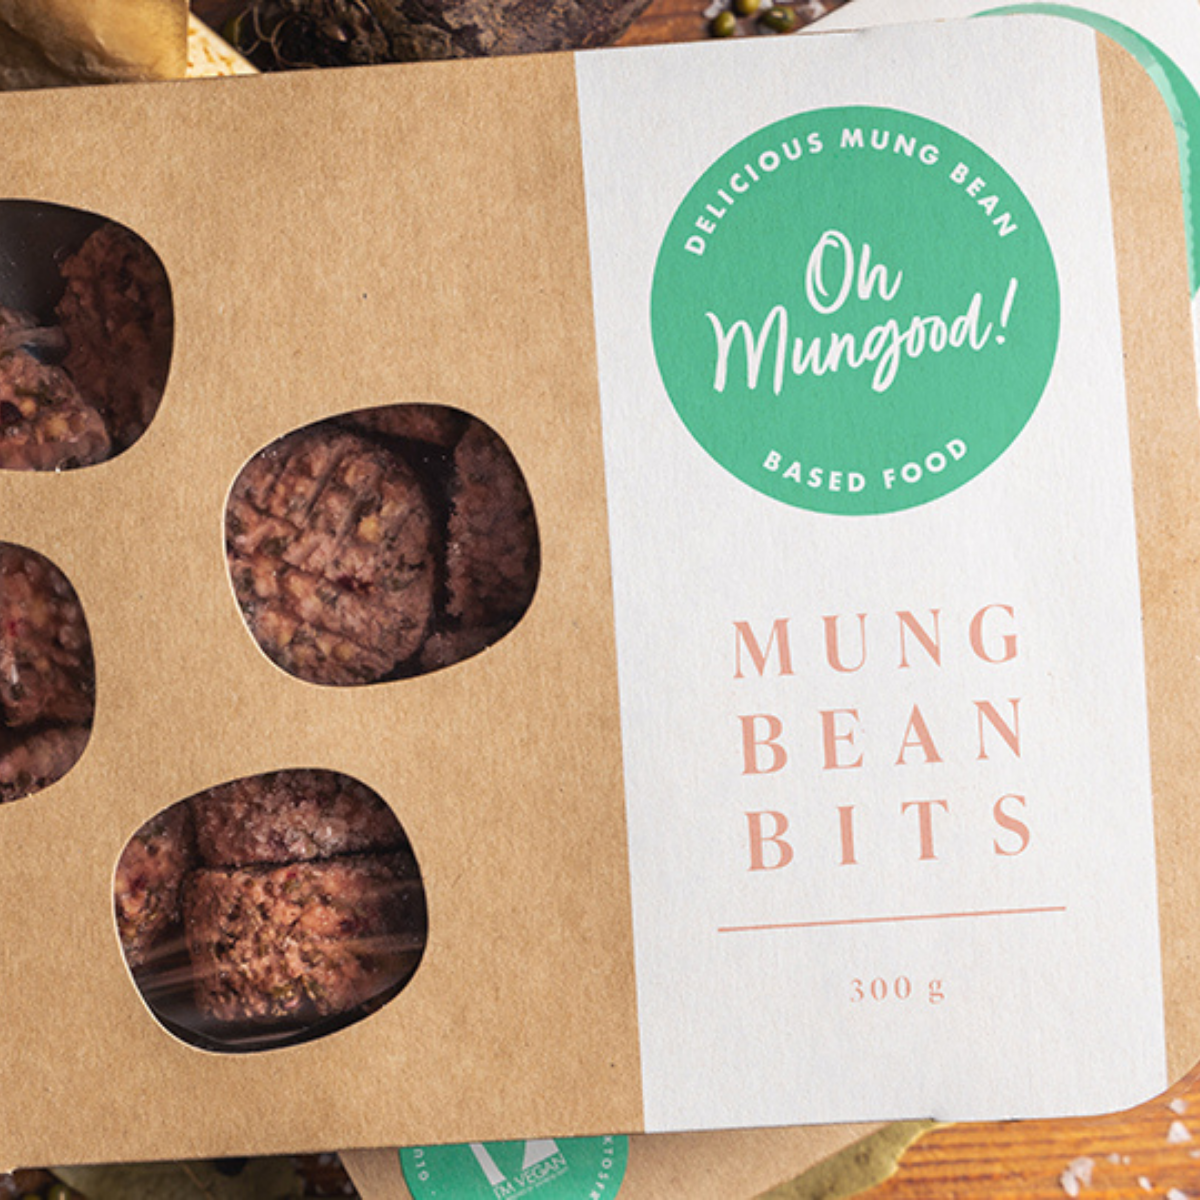 OMG Plantbased Food - Oh Mungood's Oh Mungoods mungbits'